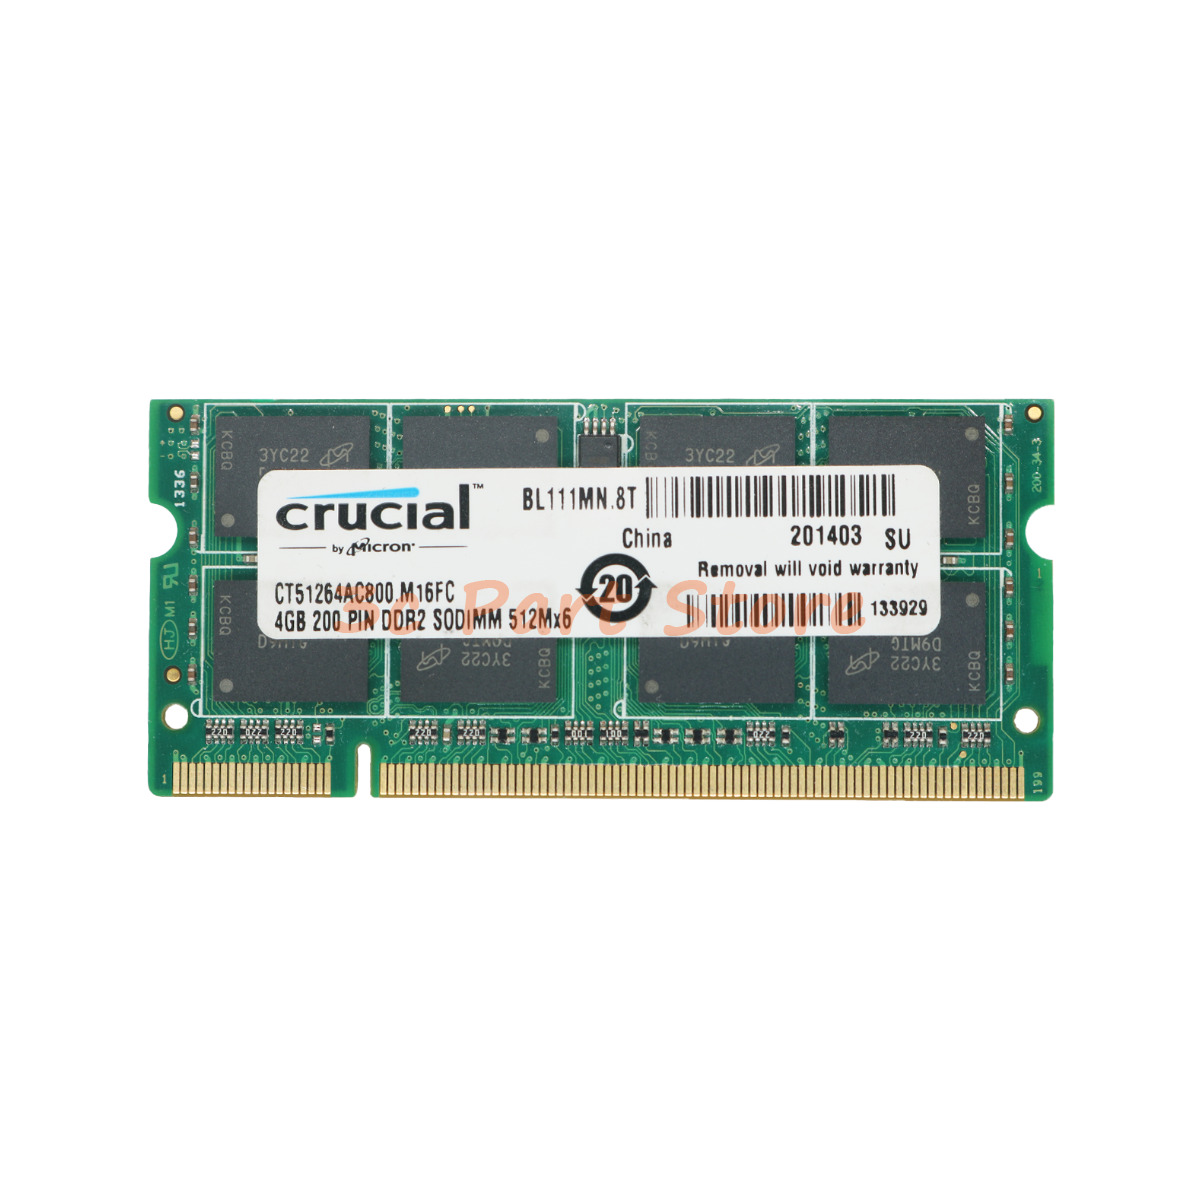 Crucial DDR2 4GB 8GB PC2-6400S 800Mhz CL6 200Pin 1.8V SODIMM Laptop Memory Ram